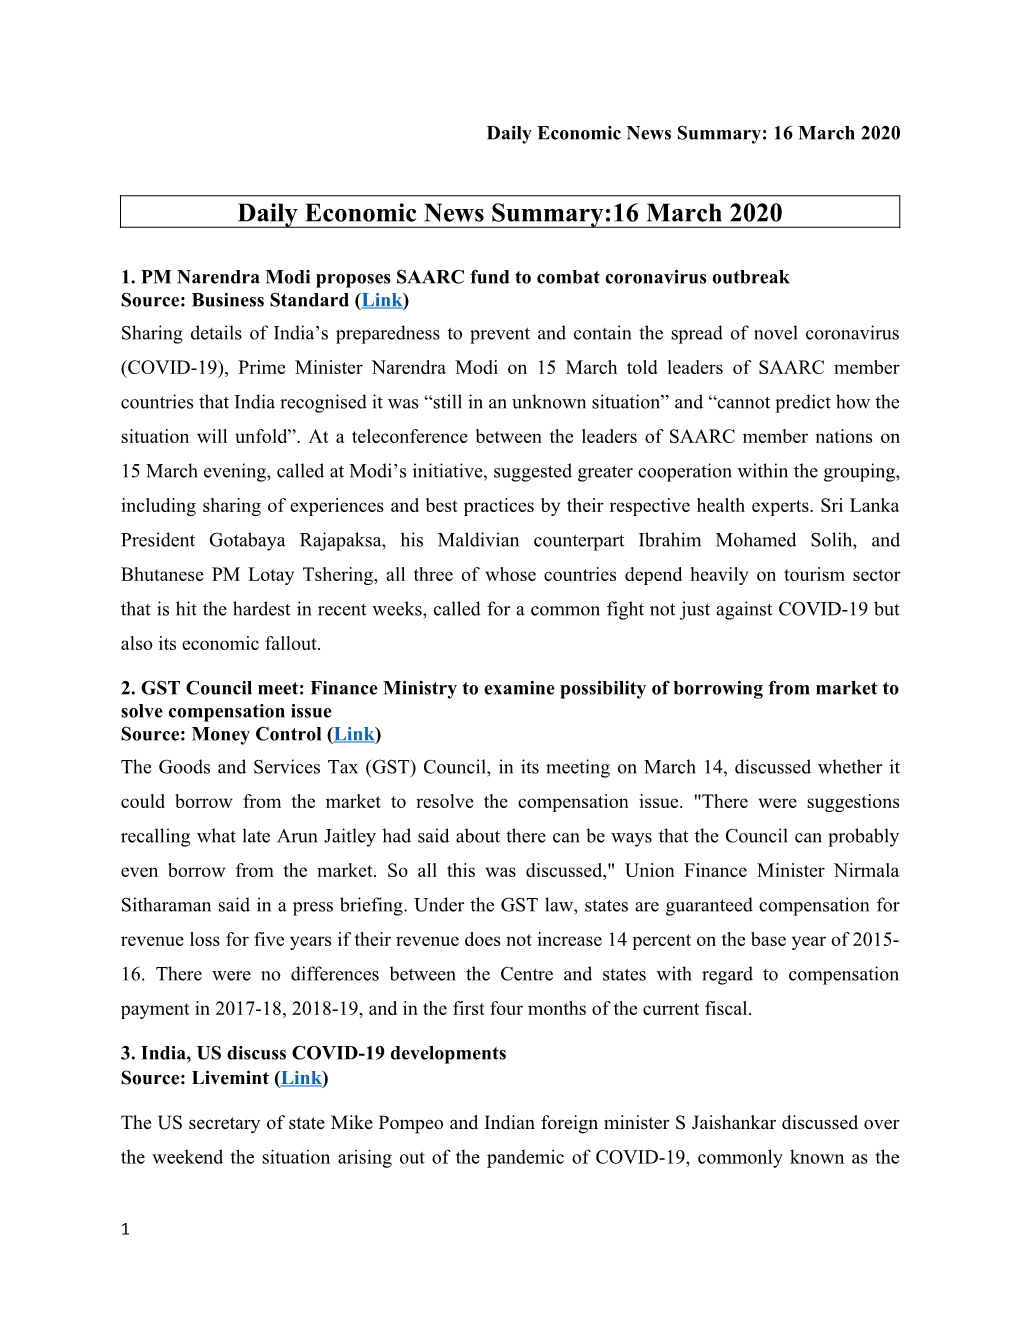 Daily Economic News Summary:16 March 2020